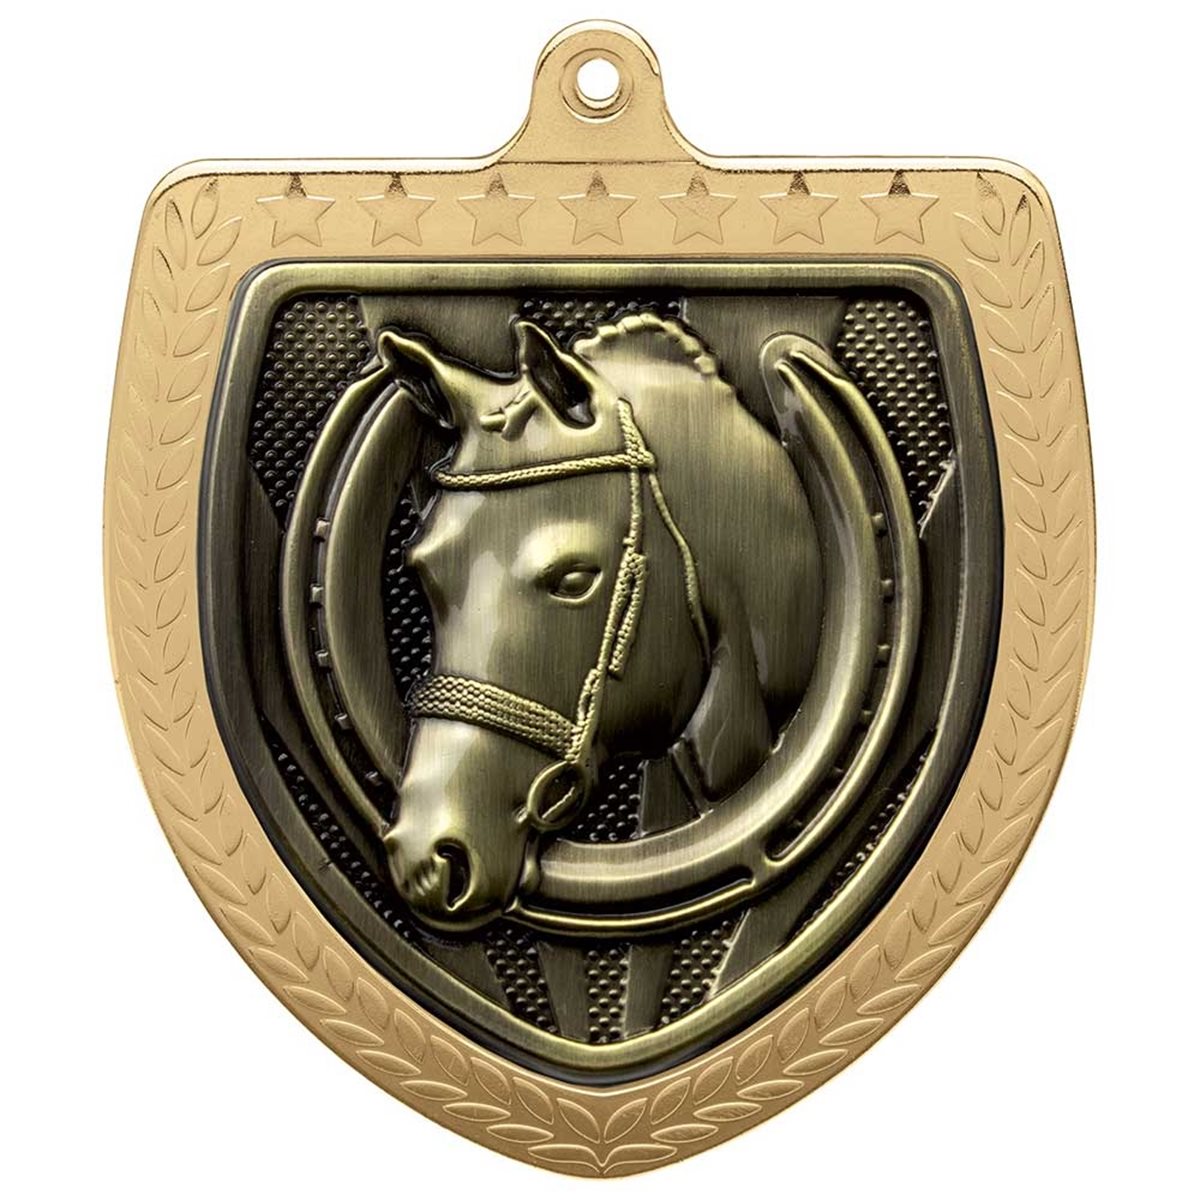 Equestrian 75mm Cobra Shield Medal in Gold, Silver & Bronze MM24220